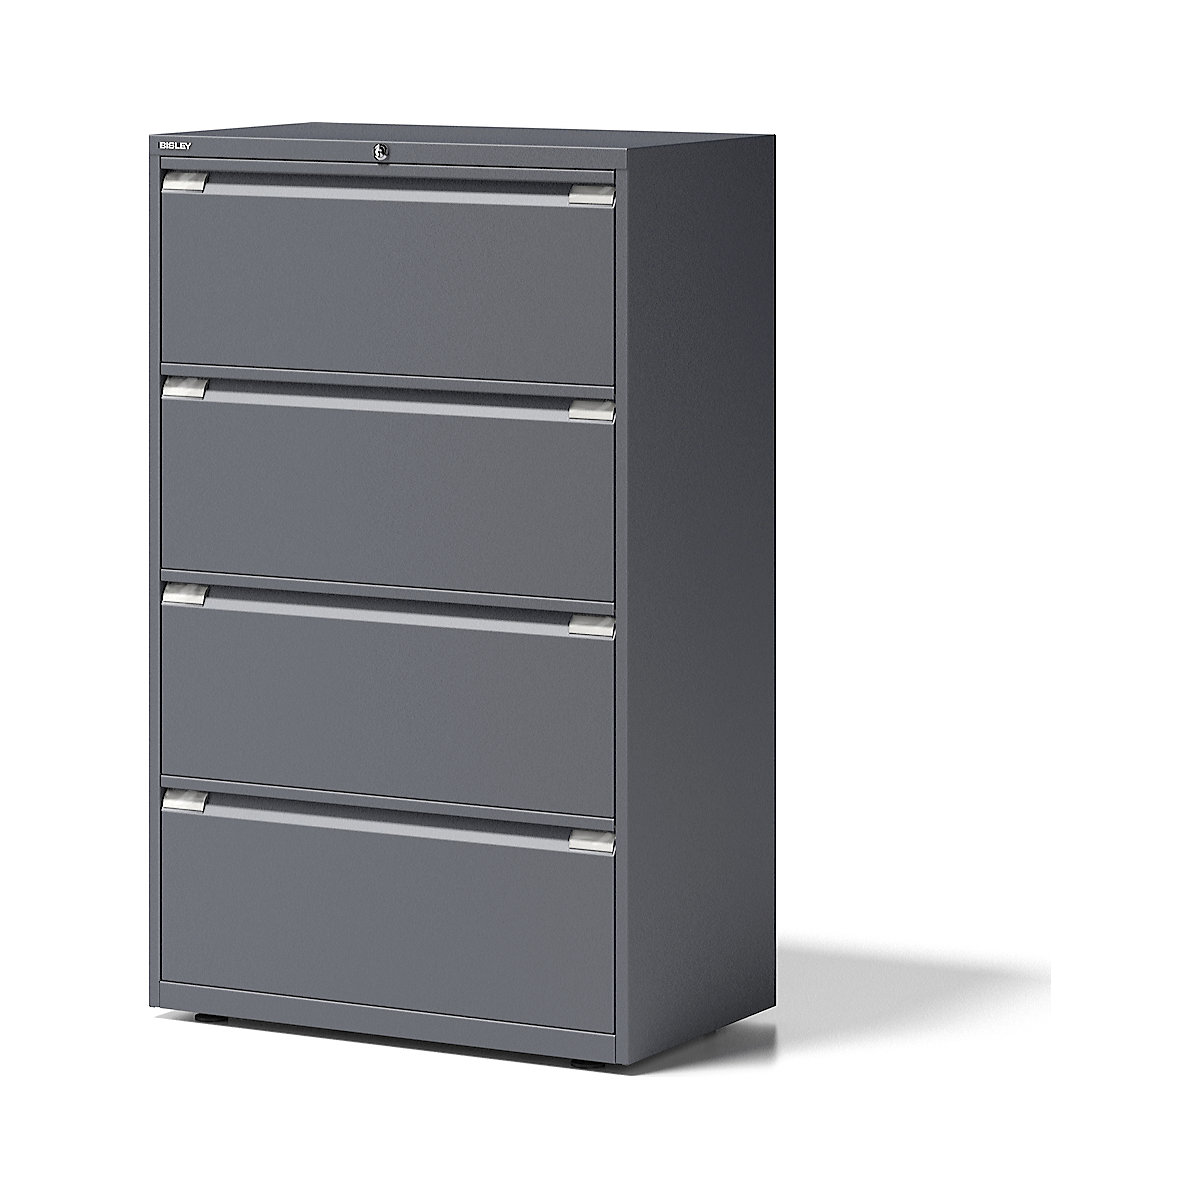 BISLEY – ESSENTIALS suspension filing cabinet, 2 rails, 4 drawers, charcoal